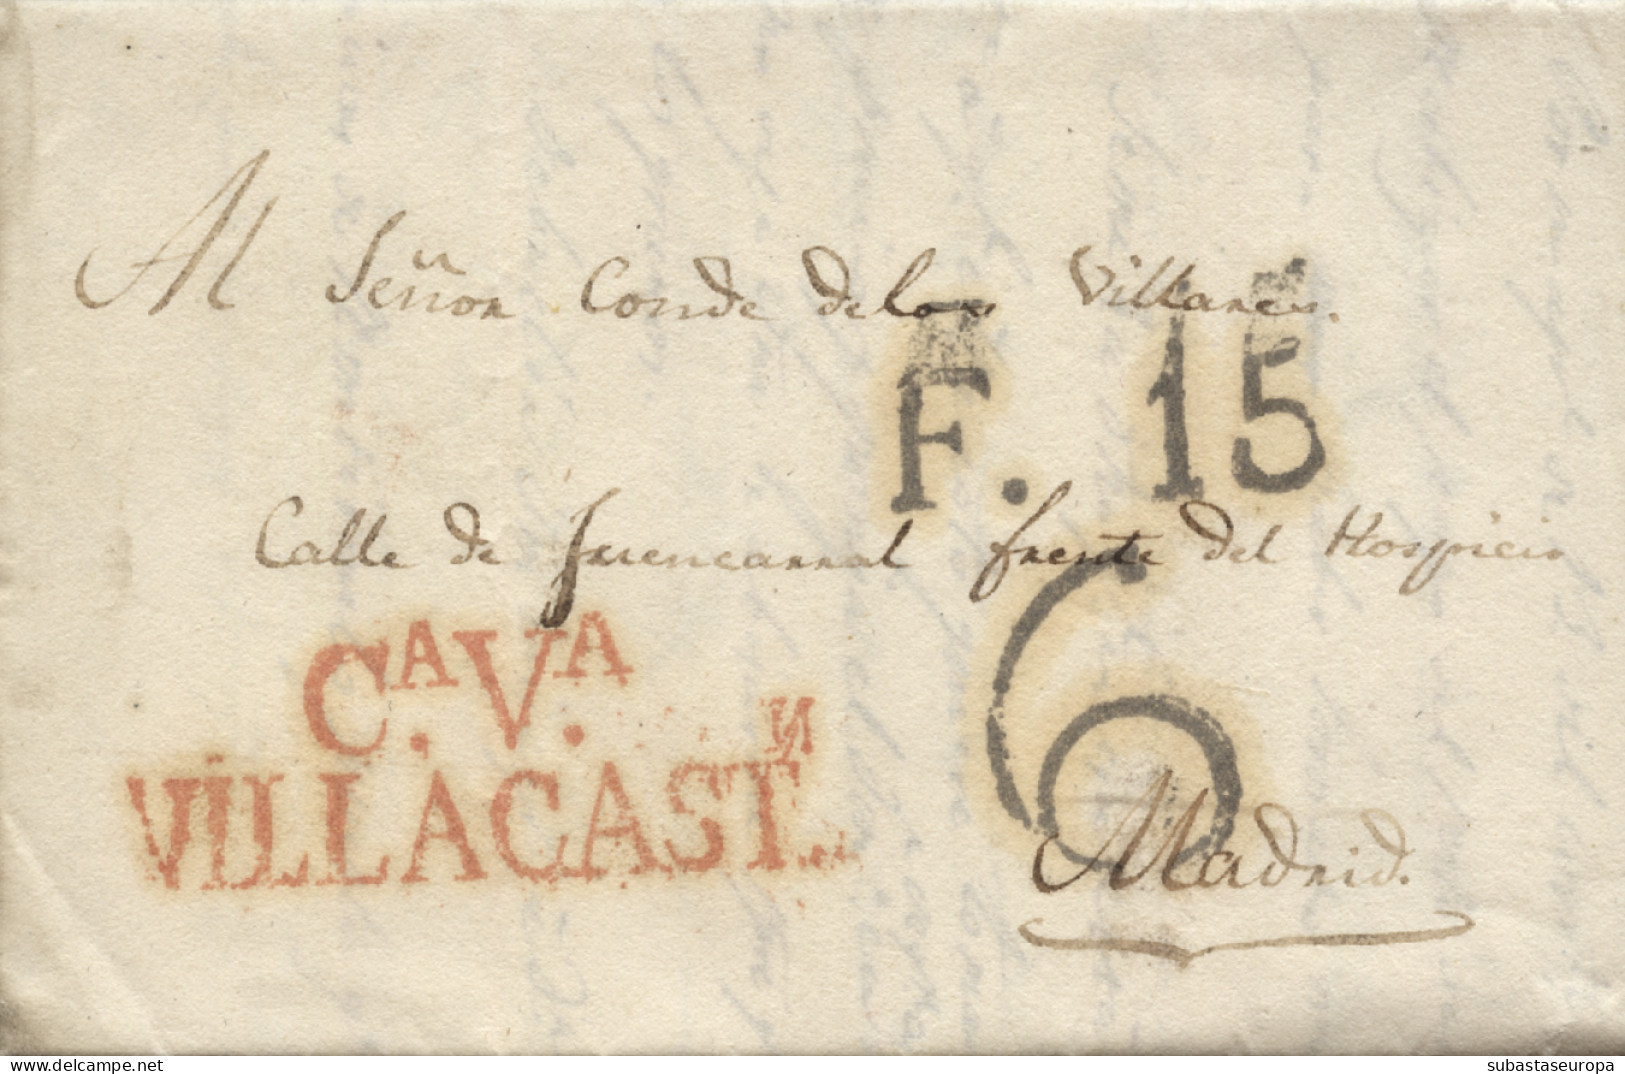 D.P. 14. 1825 (13 FEB). Carta De Villacastín A Madrid. Marca Nº 4R. Lujo. - ...-1850 Vorphilatelie